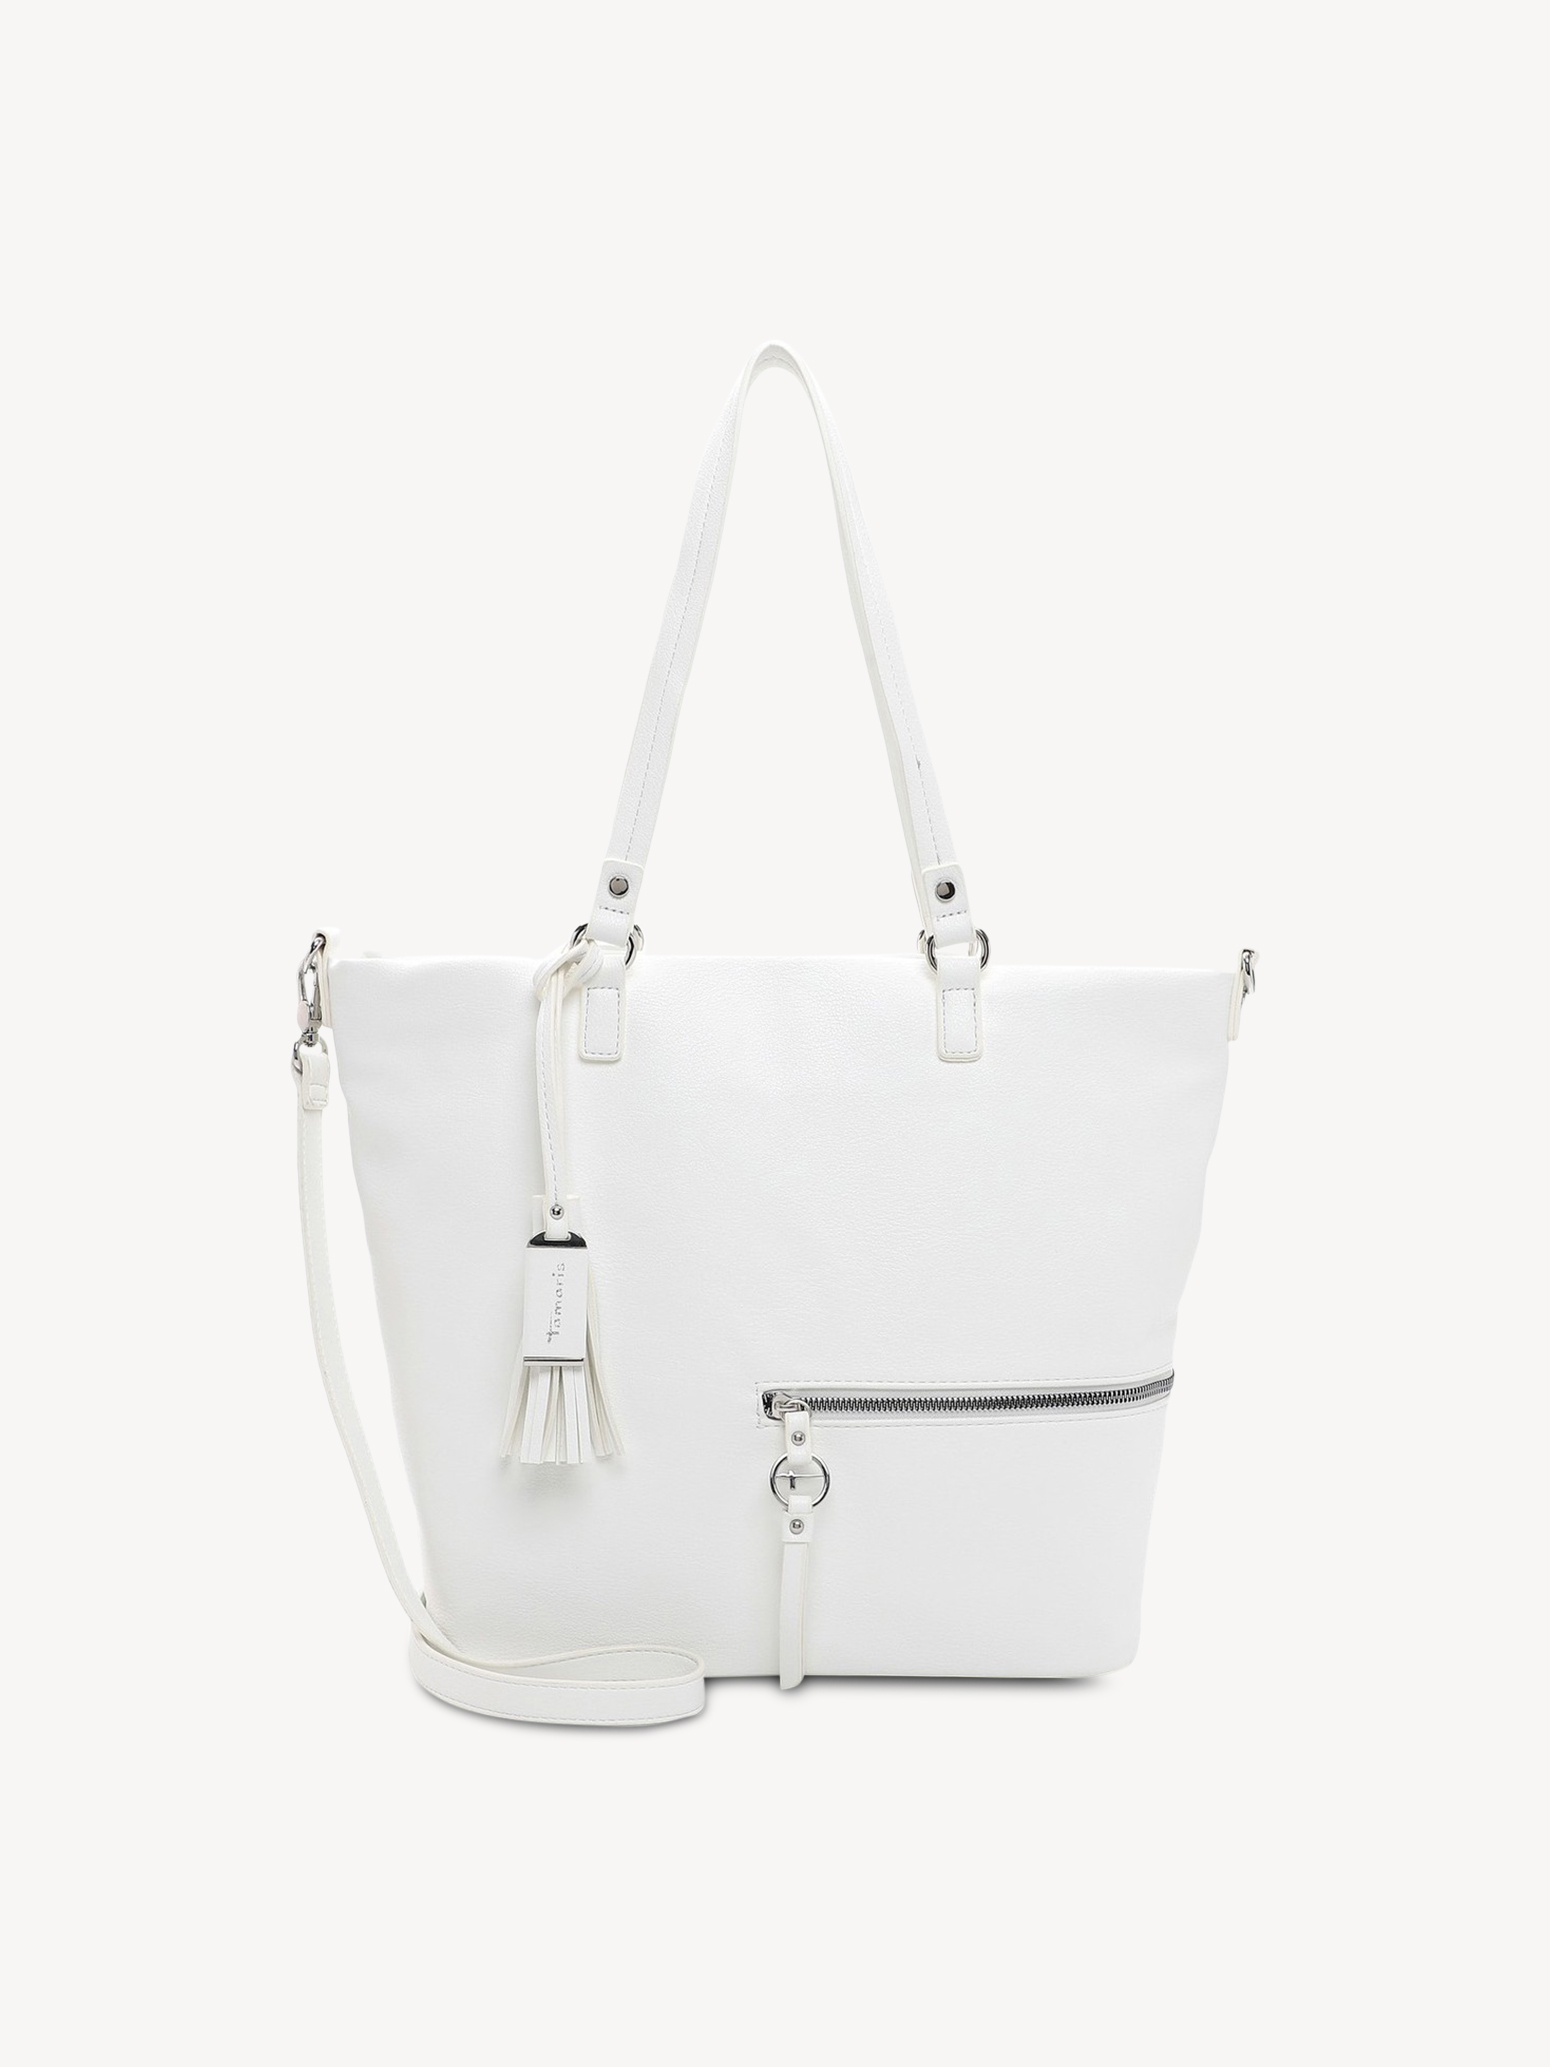 Shopping bag - white